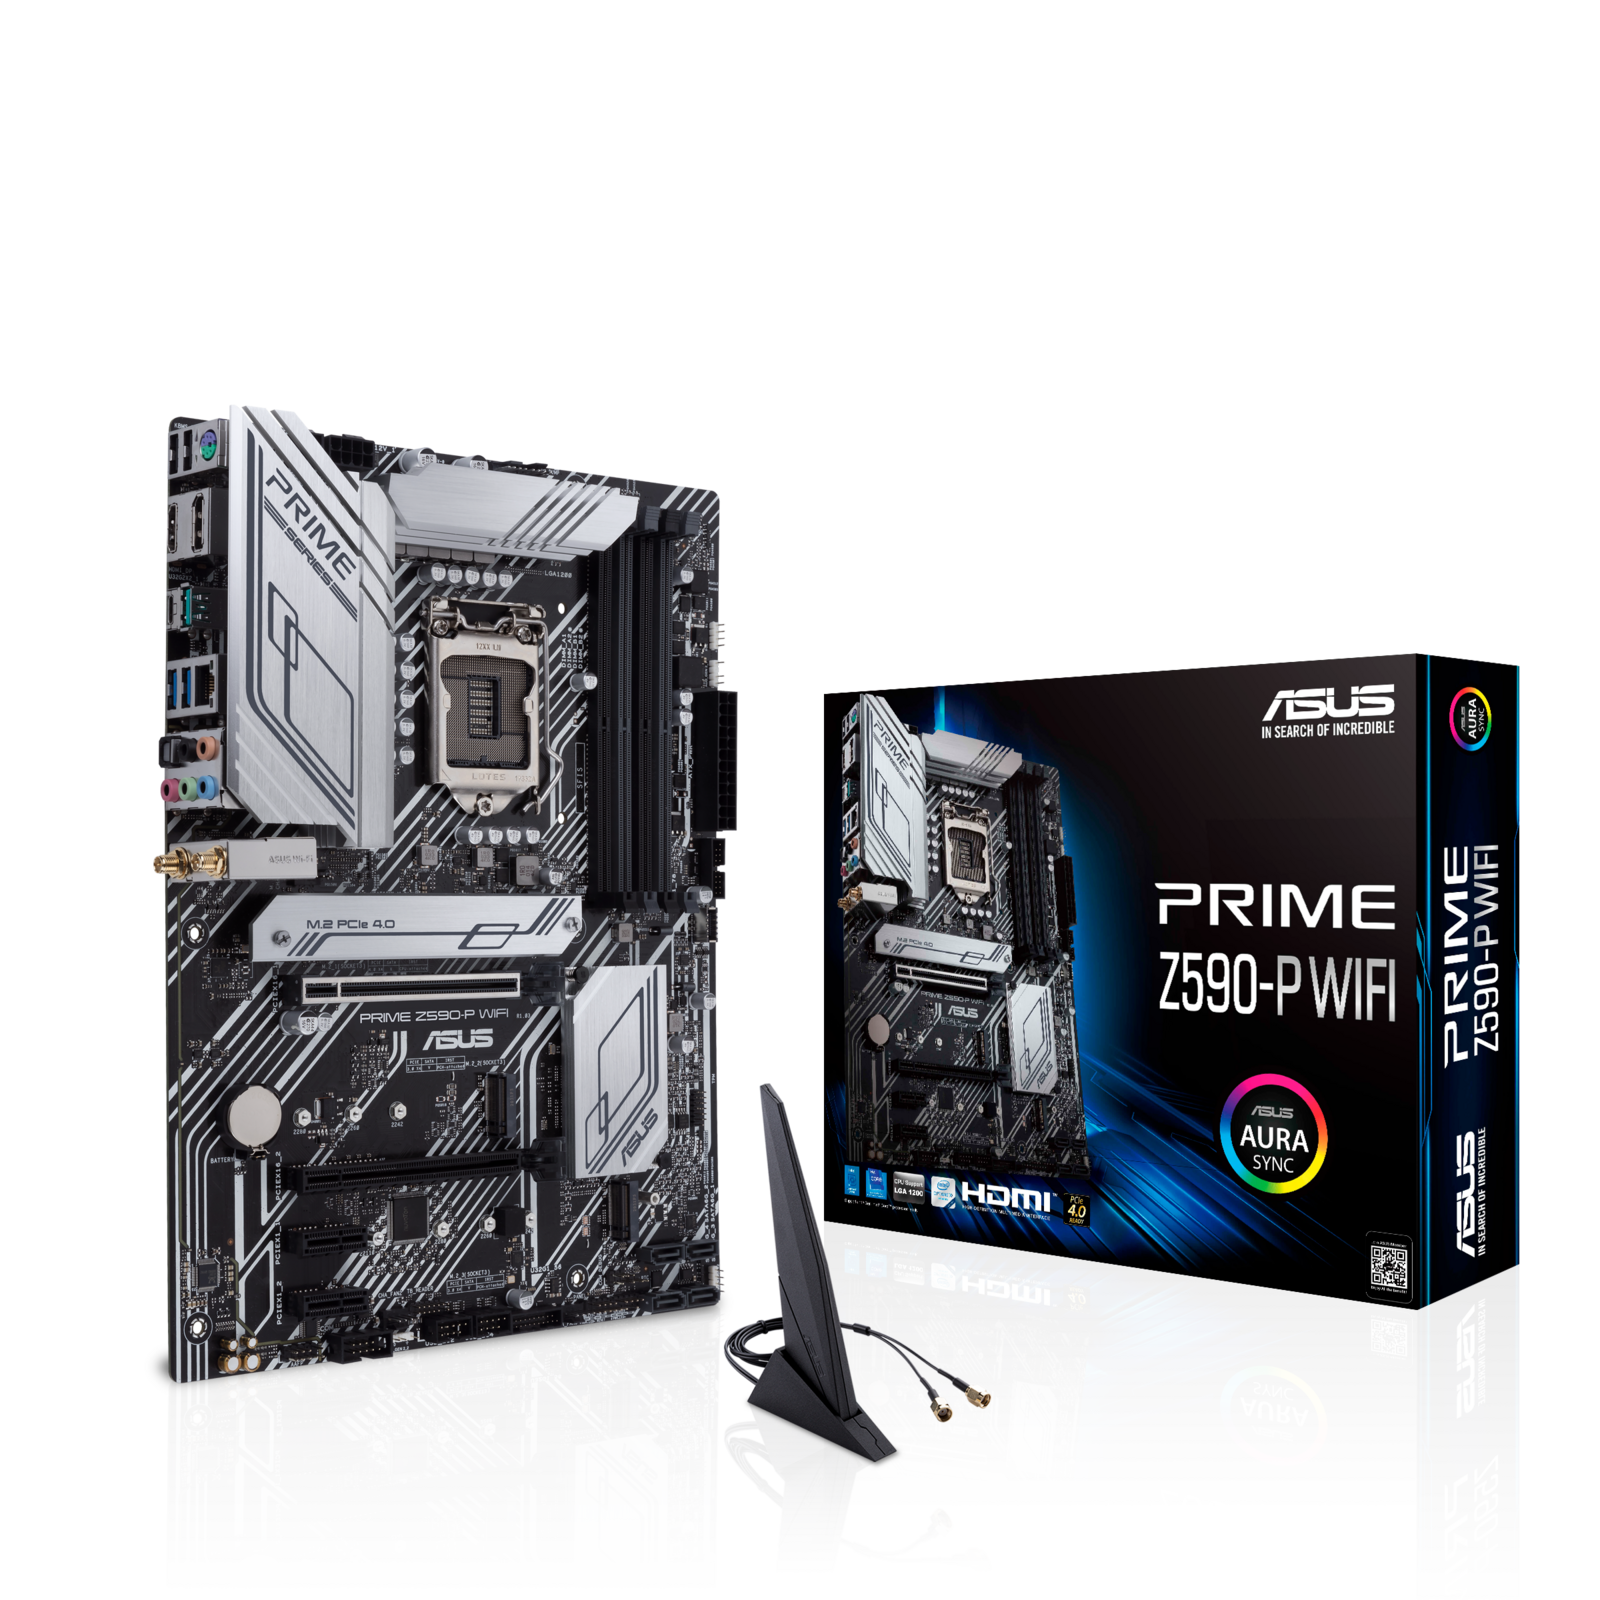 ASUS PRIME Z590-P WIFI Intel Z590 (LGA 1200) ATX motherboard with PCIe 4.0, 3xM.2 Slots HDMI, DisplayPort, SATA 6 Gbps, 2.5 Gb Ethernet, WIFI6, RGB